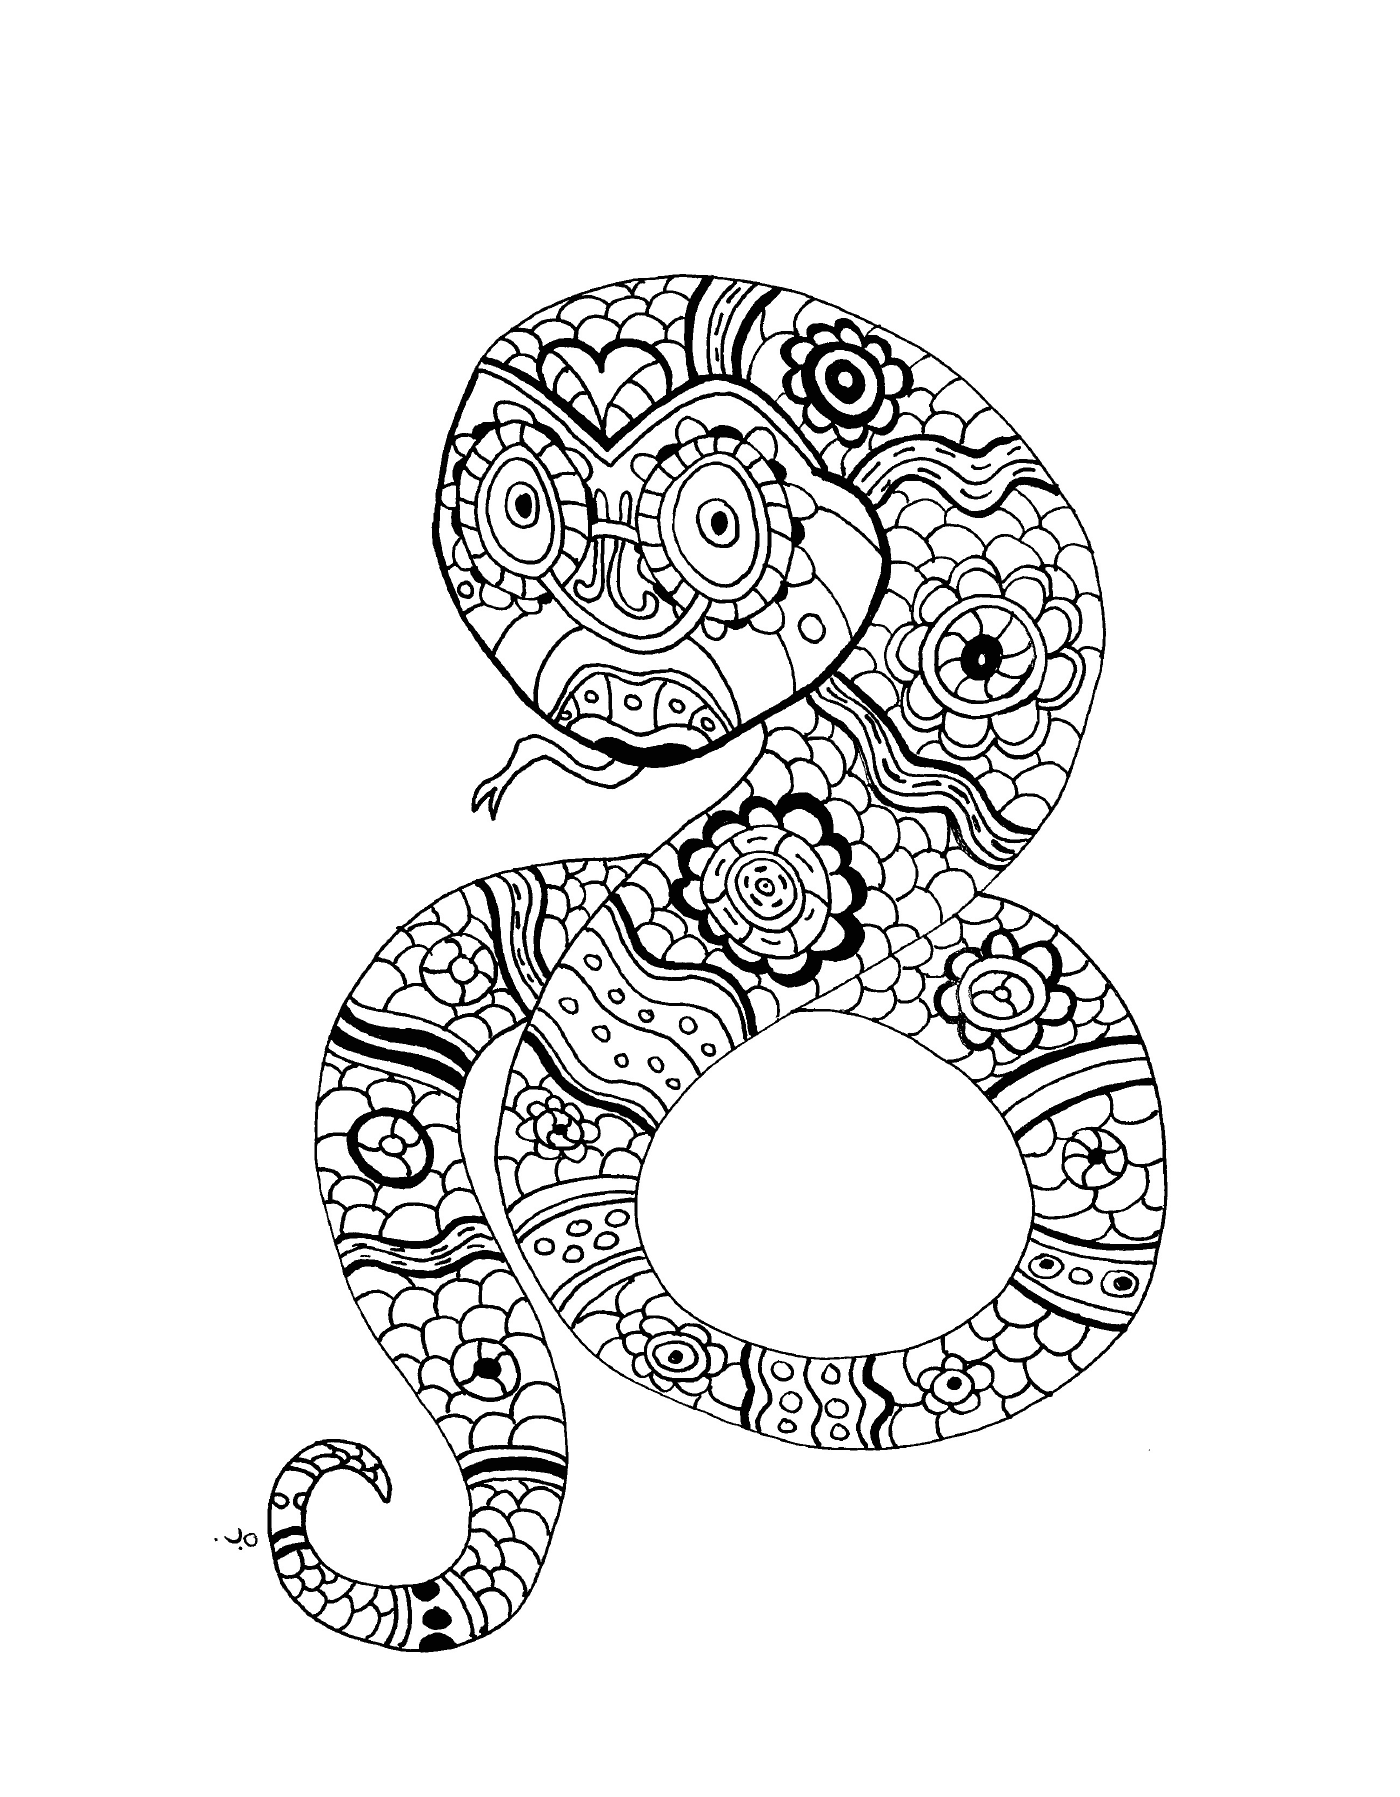  Un serpente ornamentale con motivo floreale 